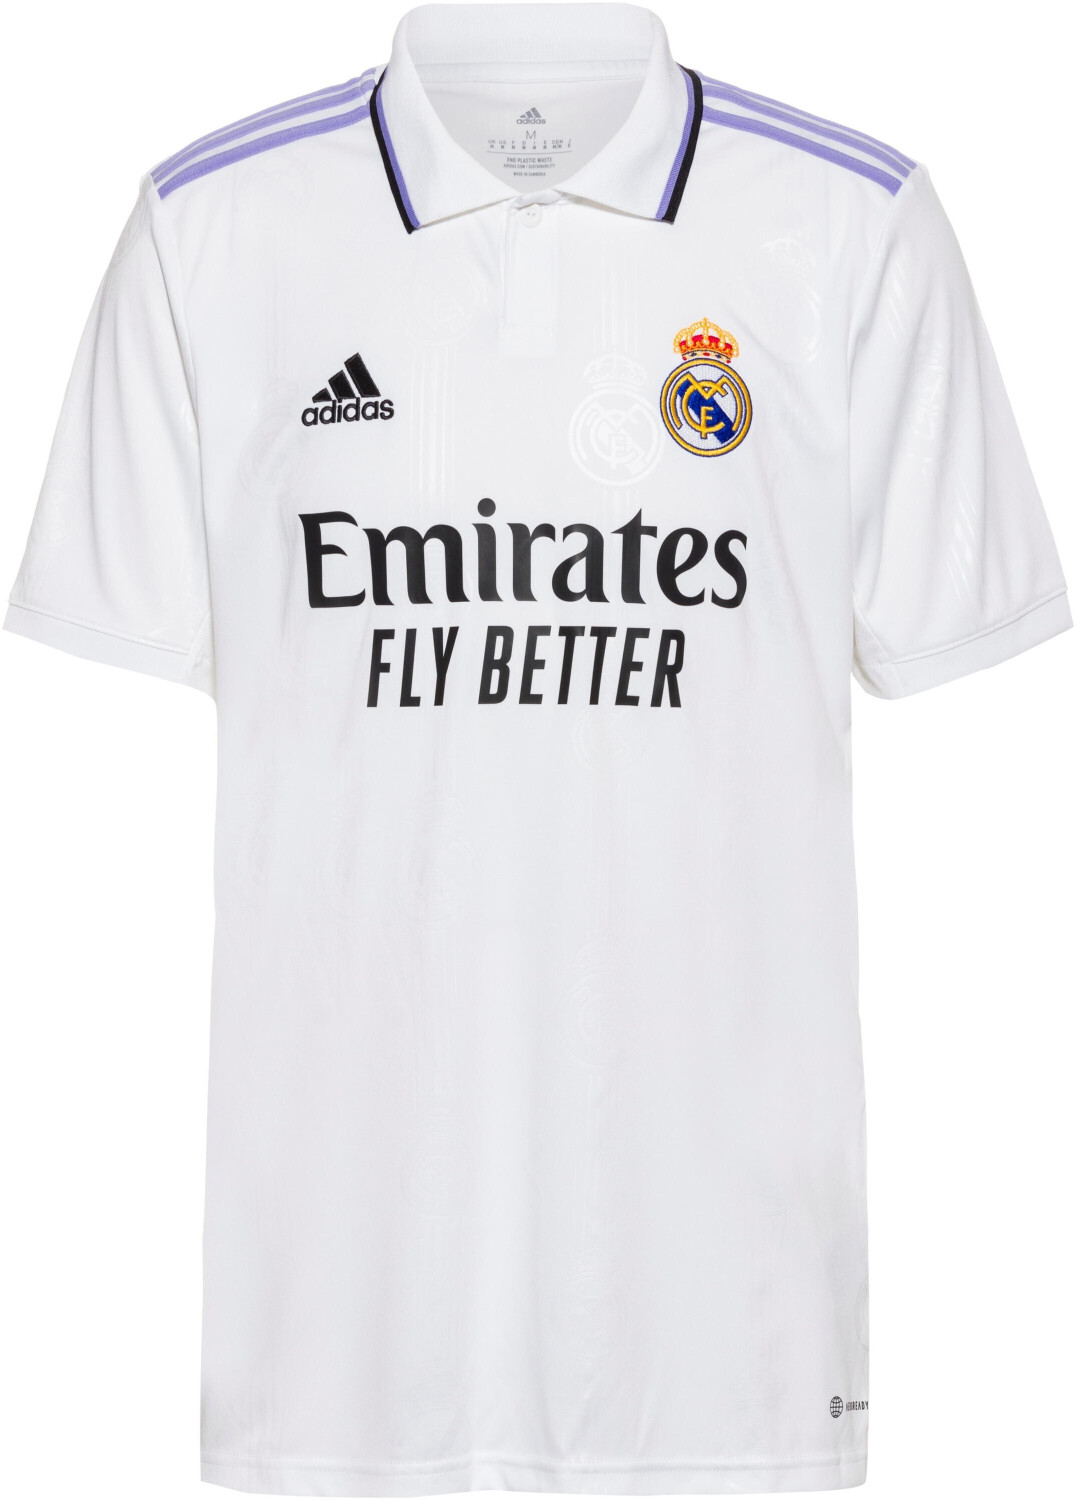 Real Madrid Camiseta Hombre Tercera Equipación Negra Temporada